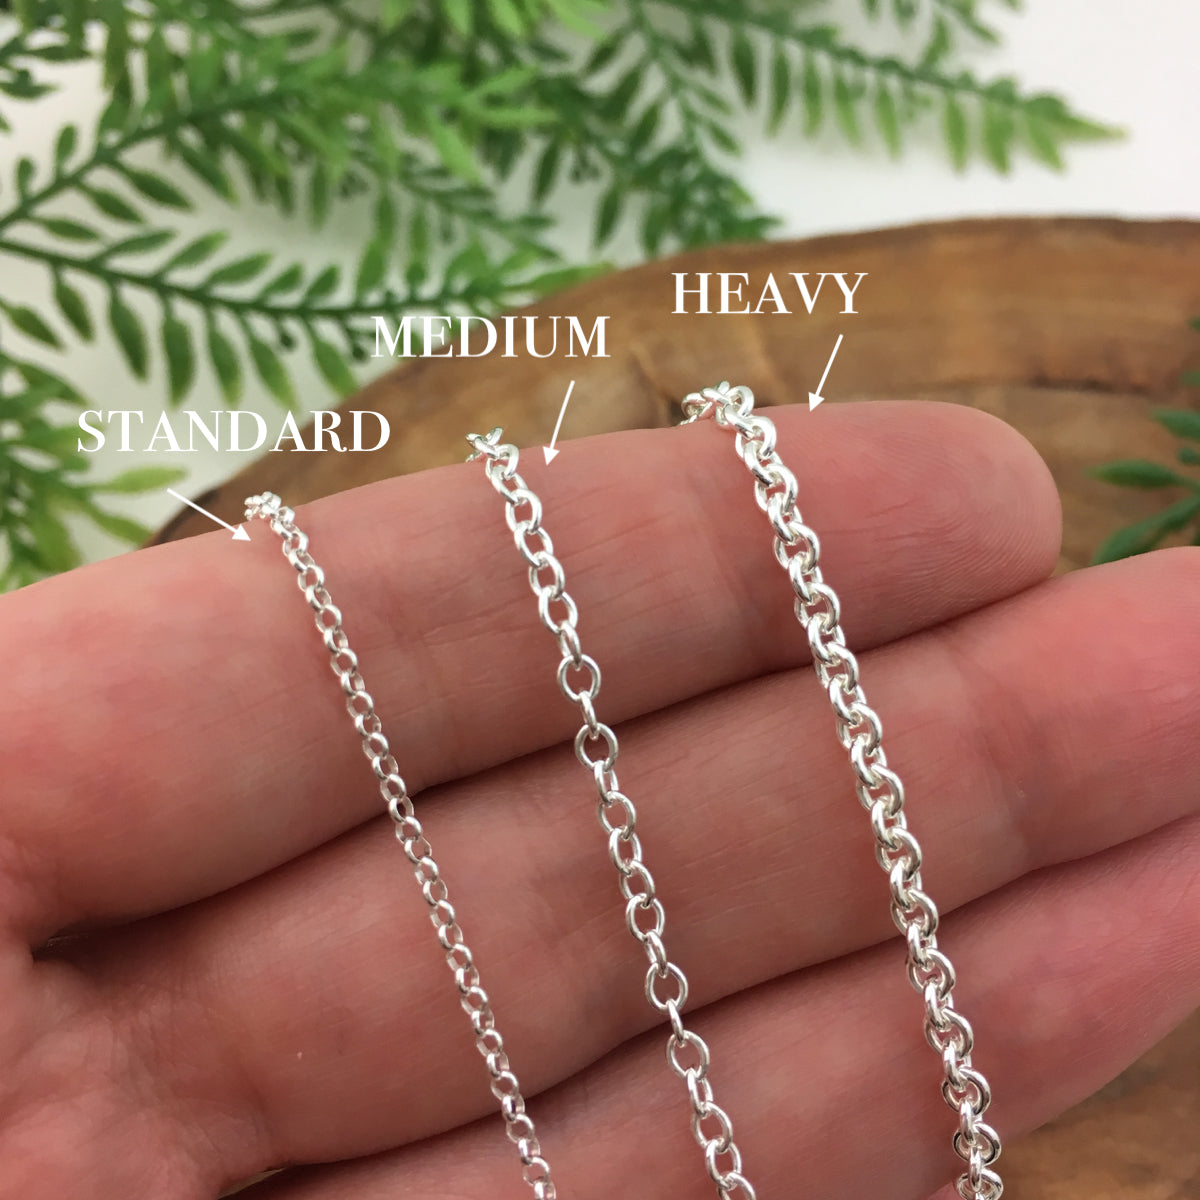 Chain Upgrade* - Upgrade to Medium Silver Chain